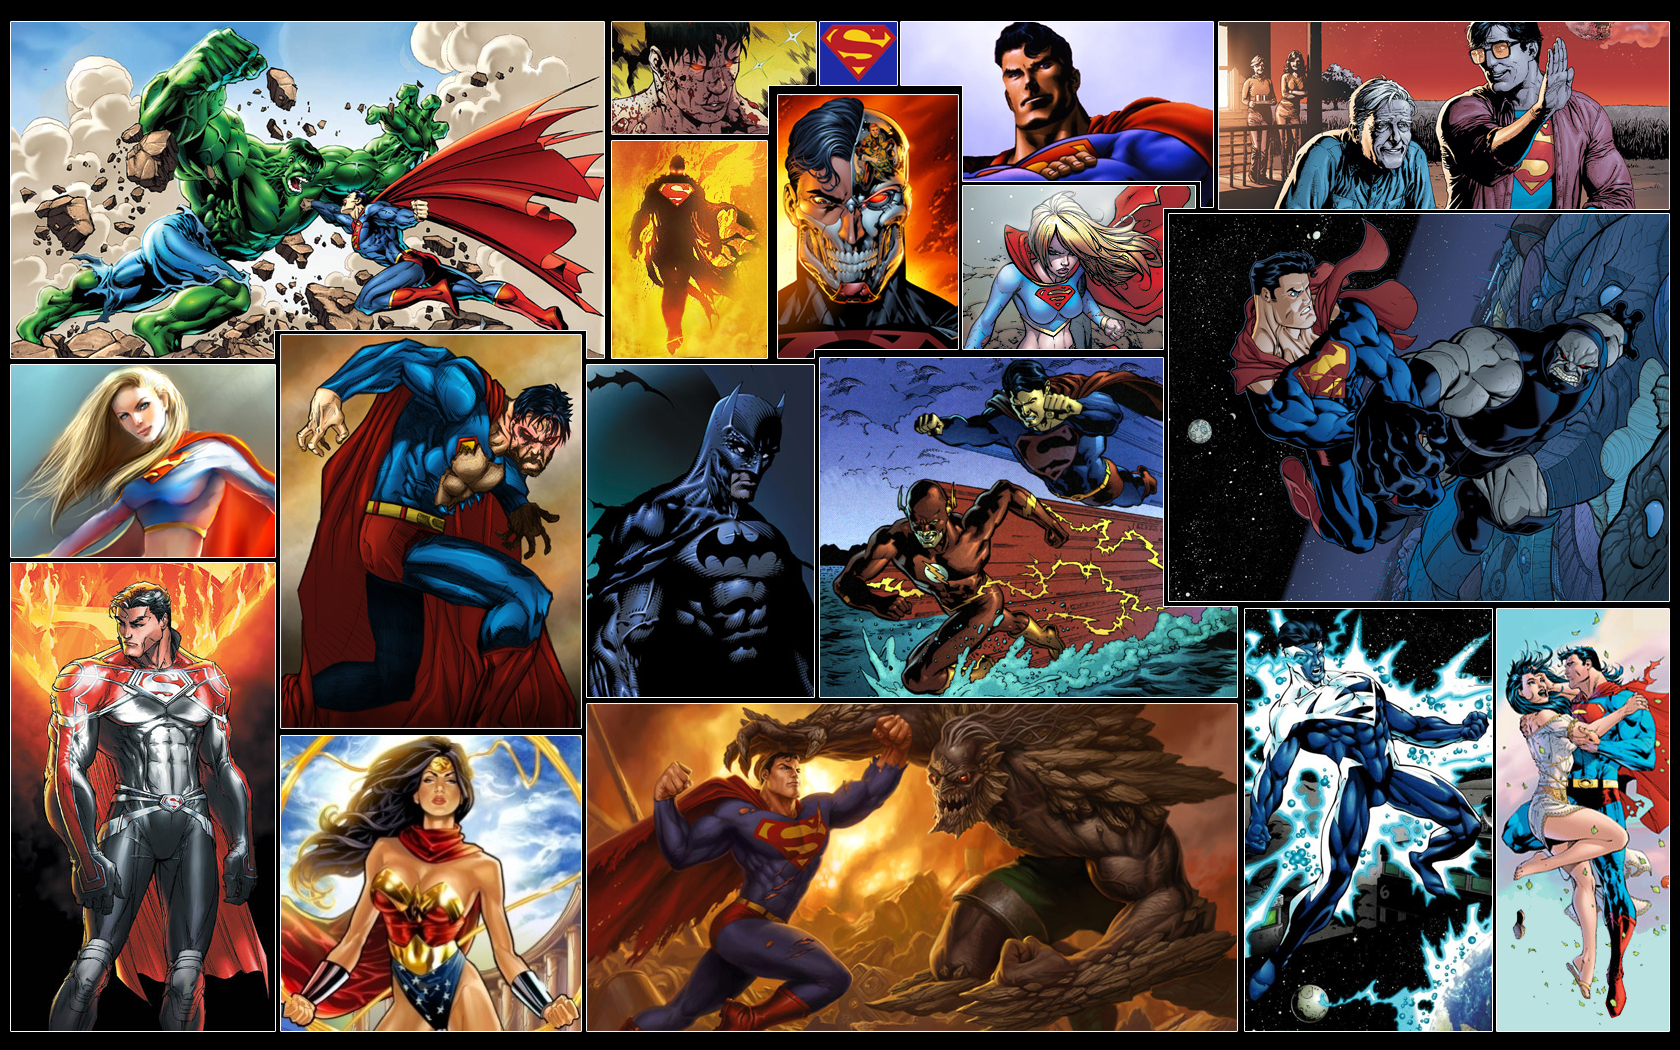 344428 скачать обои комиксы, супермен, бэтмен, кларк кент, киборг супермен, дарксайд (dc comics), комиксы dc, судный день (комиксы dc), флеш, халк, джонатан кент, лоис лейн, супергёрл, чудо женщина - заставки и картинки бесплатно